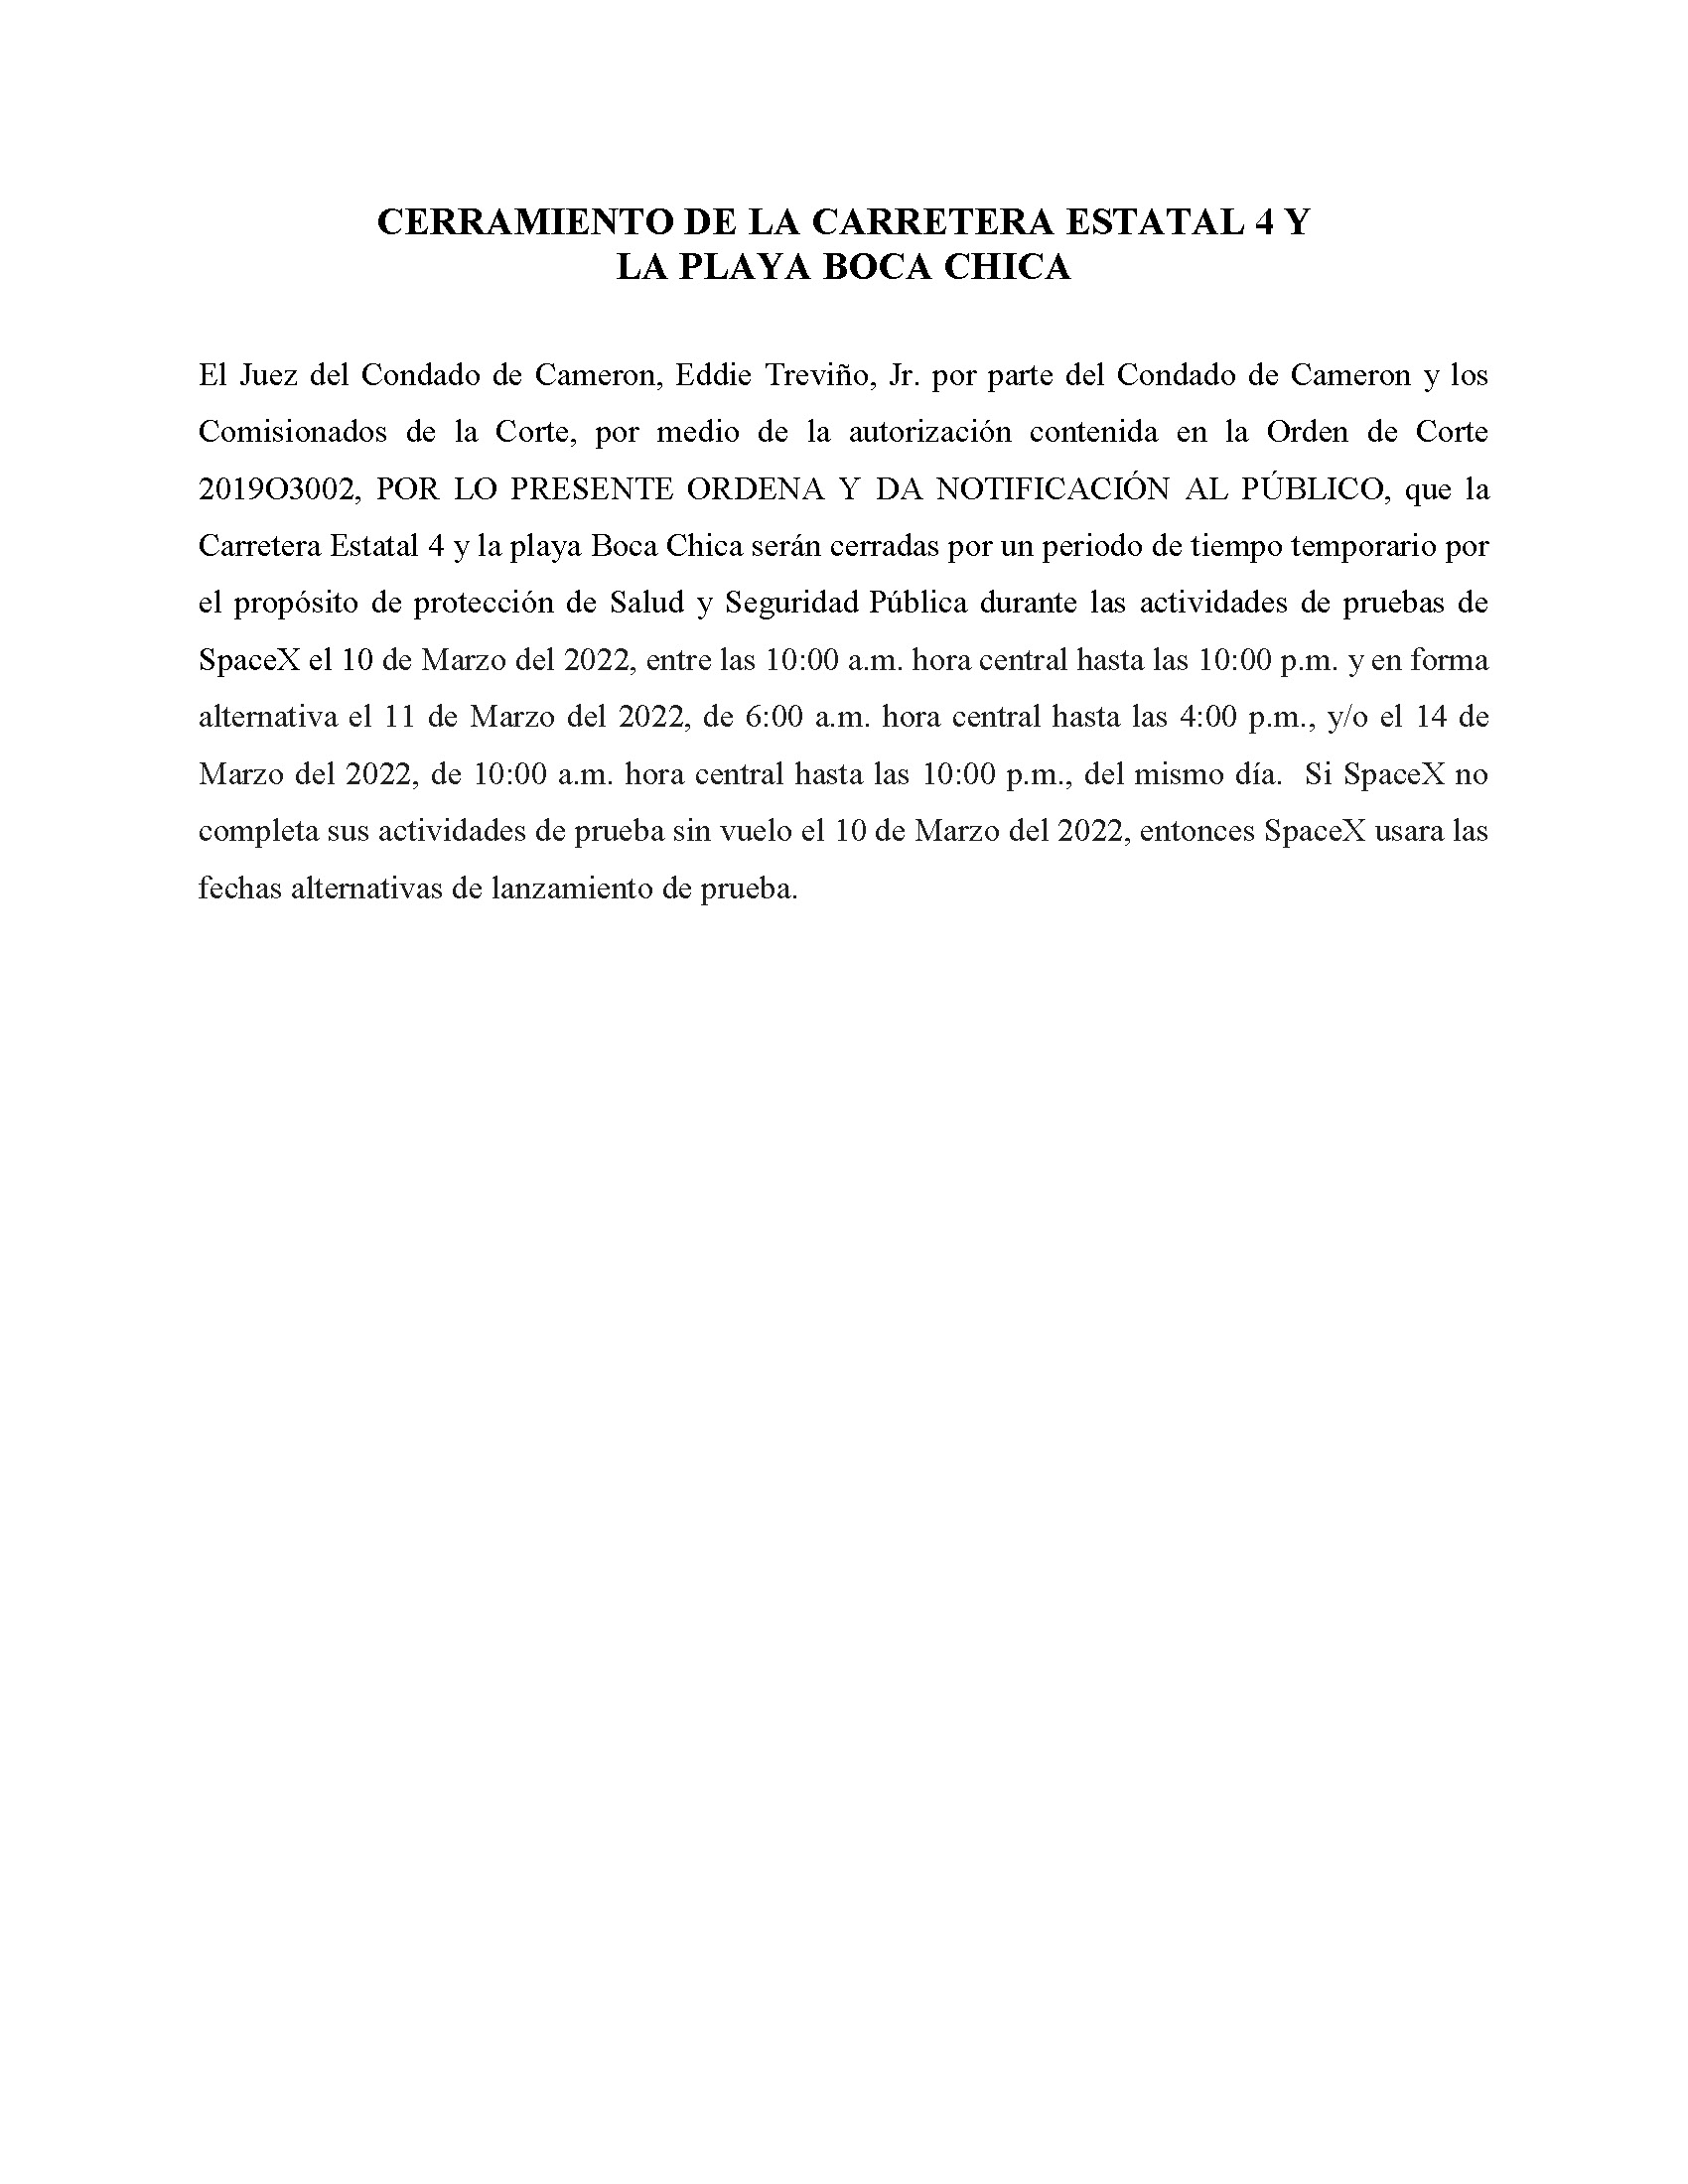 ORDER.CLOSURE OF HIGHWAY 4 Y LA PLAYA BOCA CHICA.SPANISH.03.10.2022